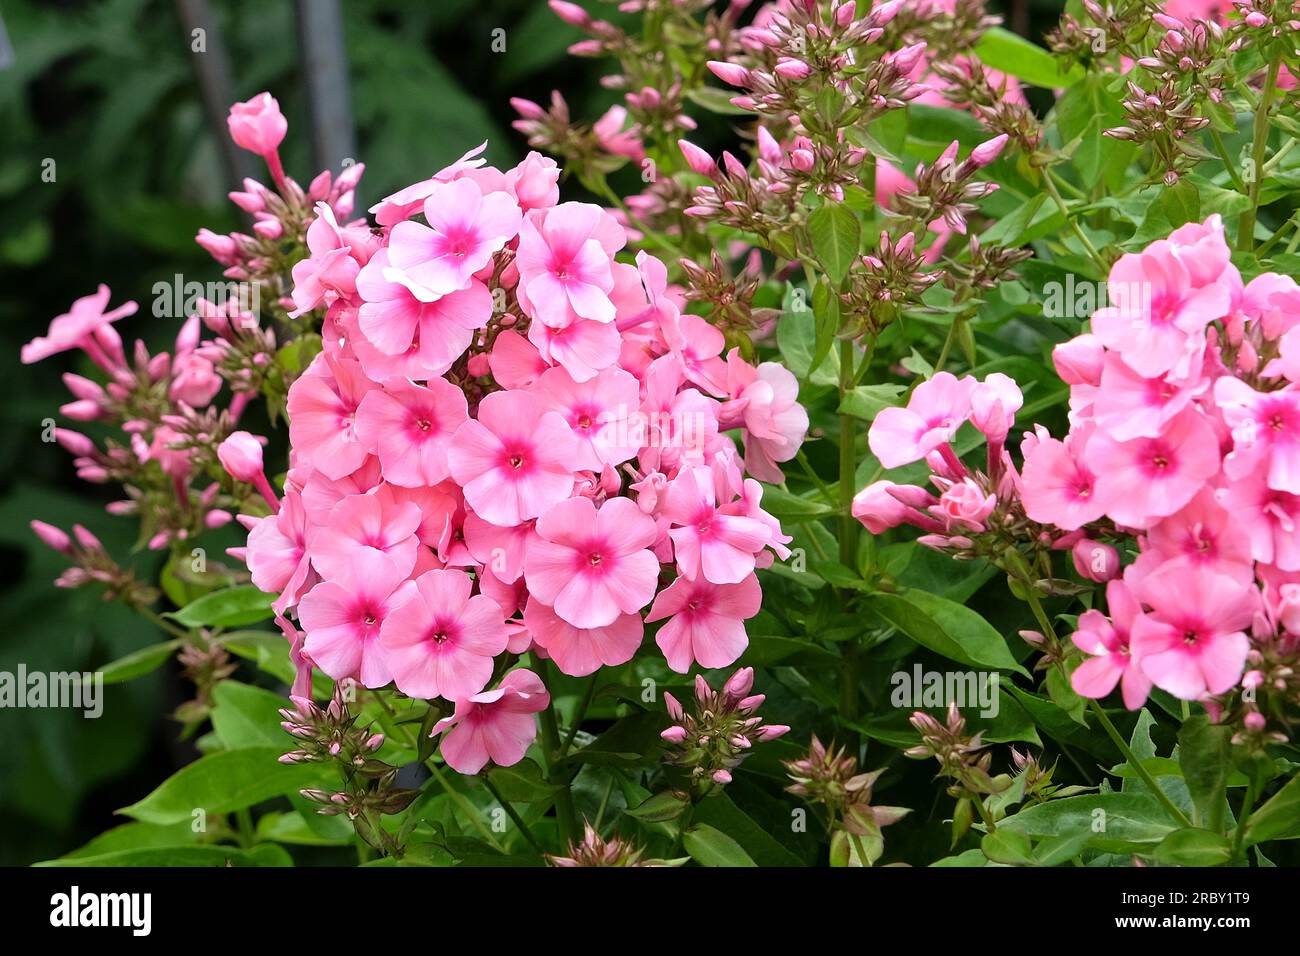 Jardin phlox Light Pink Flame' en fleur. Banque D'Images